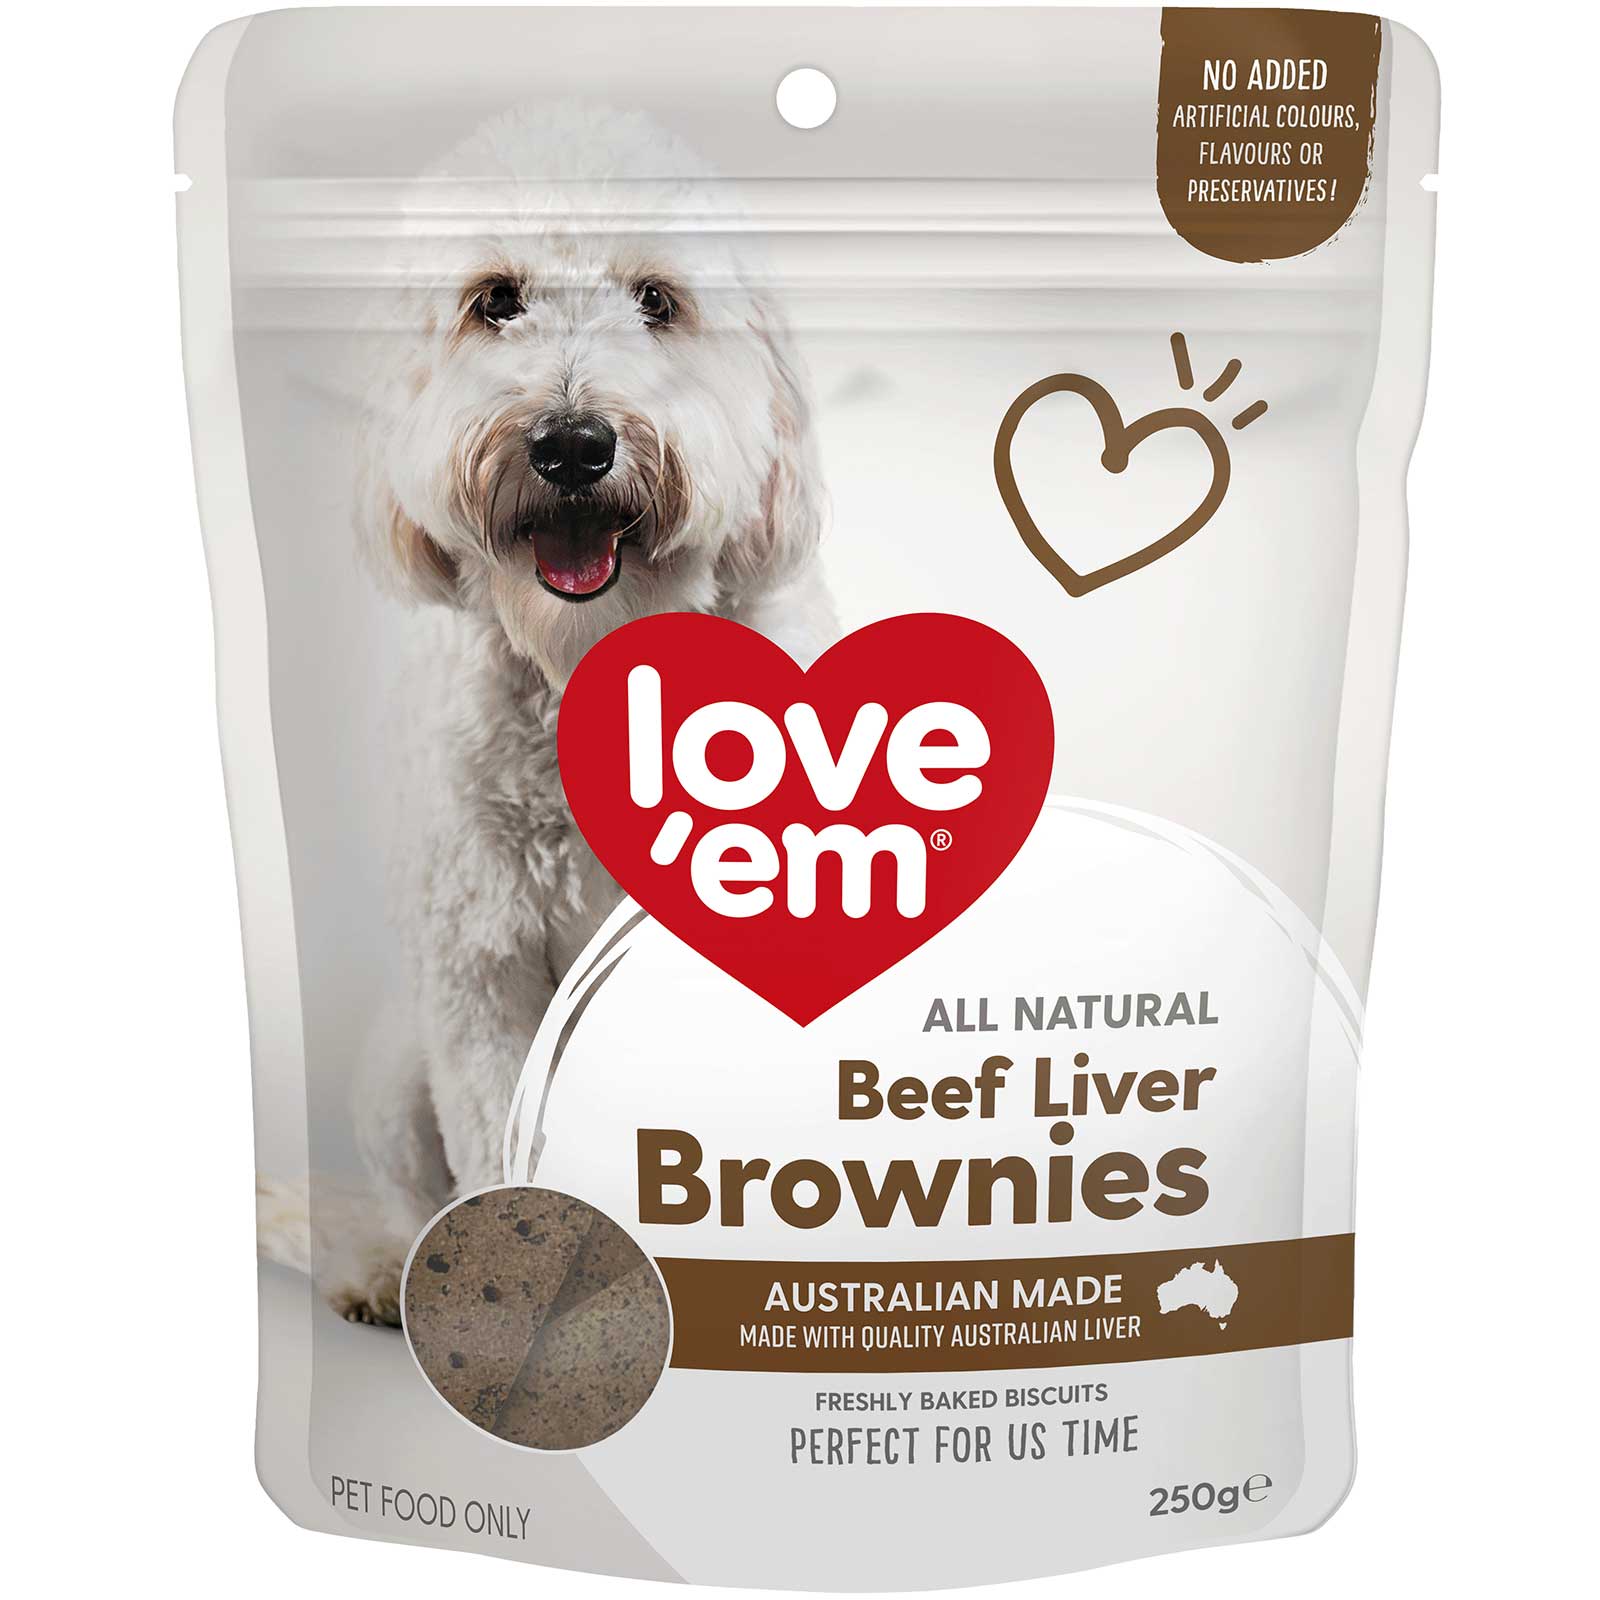 Love'em Beef Liver Brownies Dog Treats